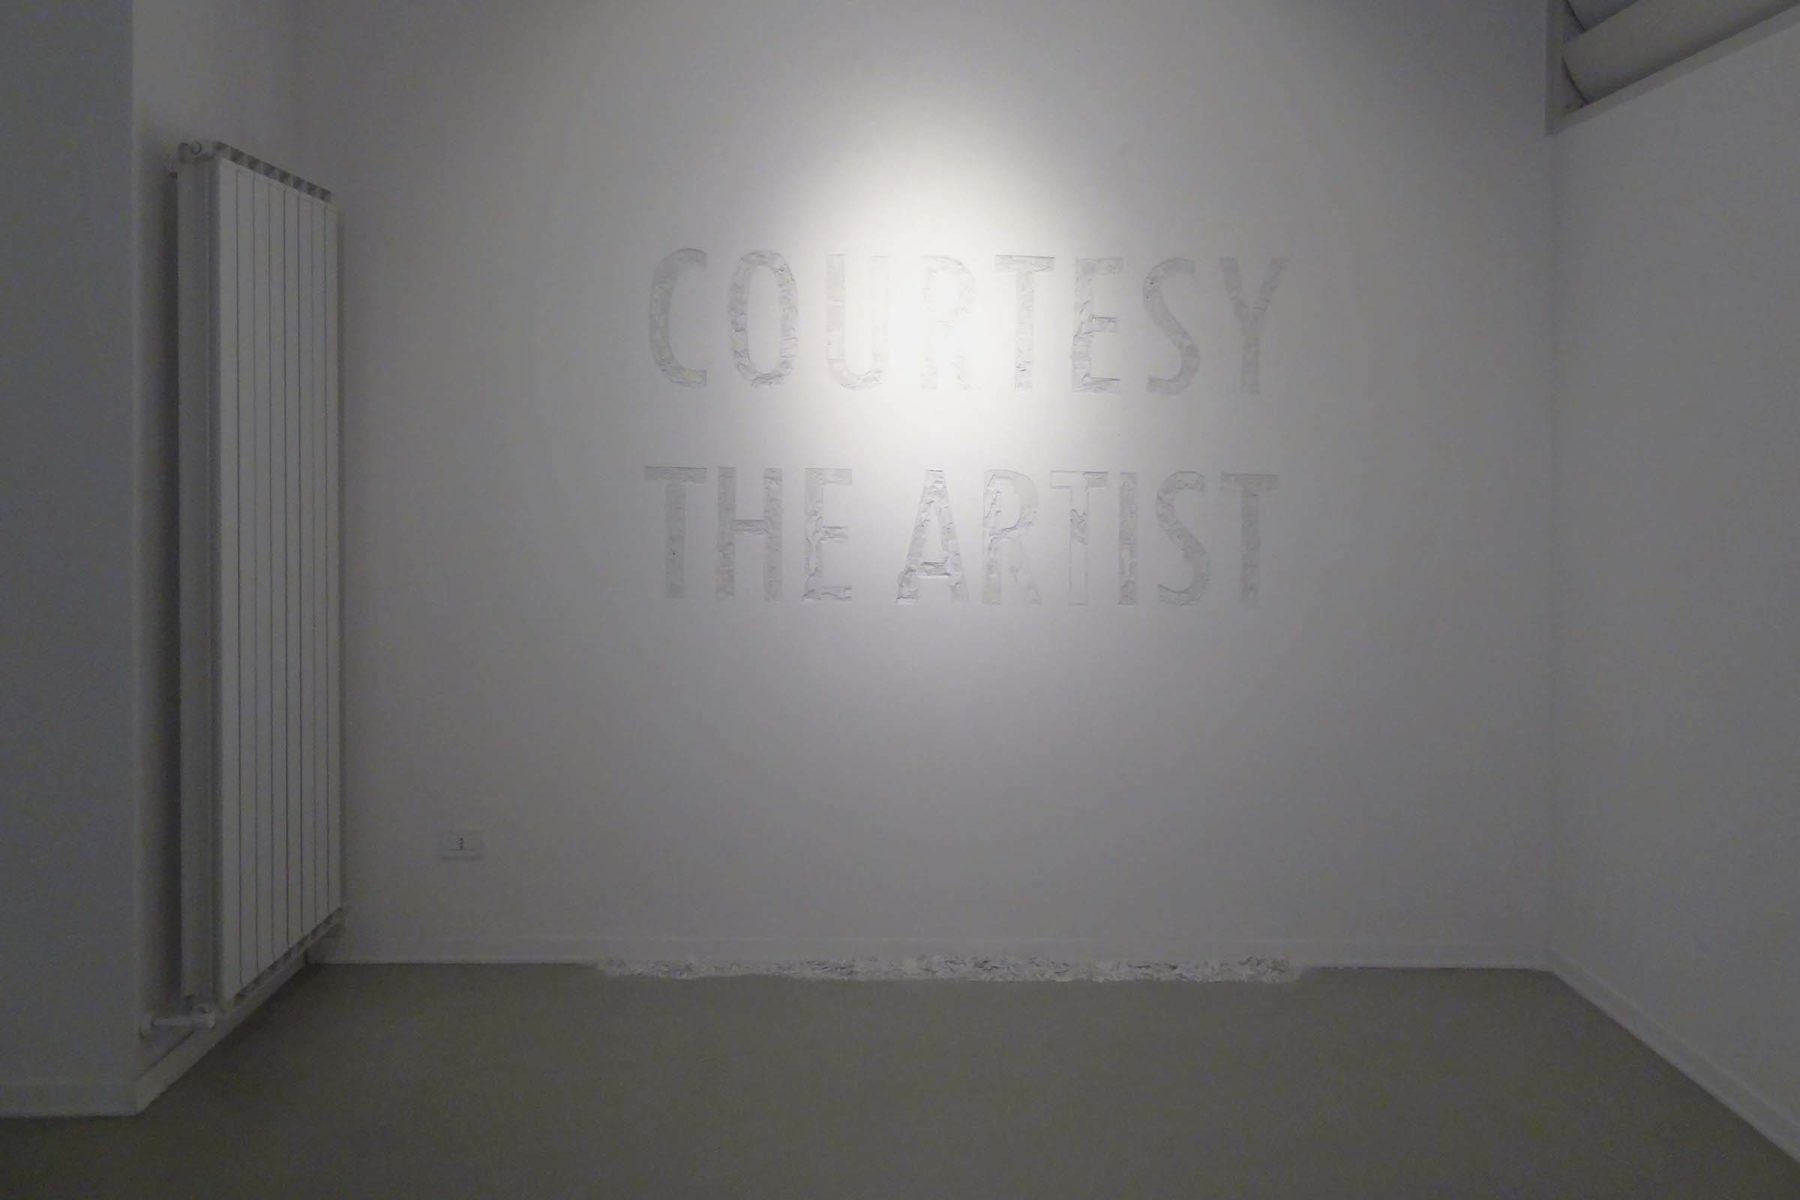 Matteo Attruia, Courtesy the Artist, installation on wall, enviromental dimensions, view at LipanjePuntin ArteContemporanea